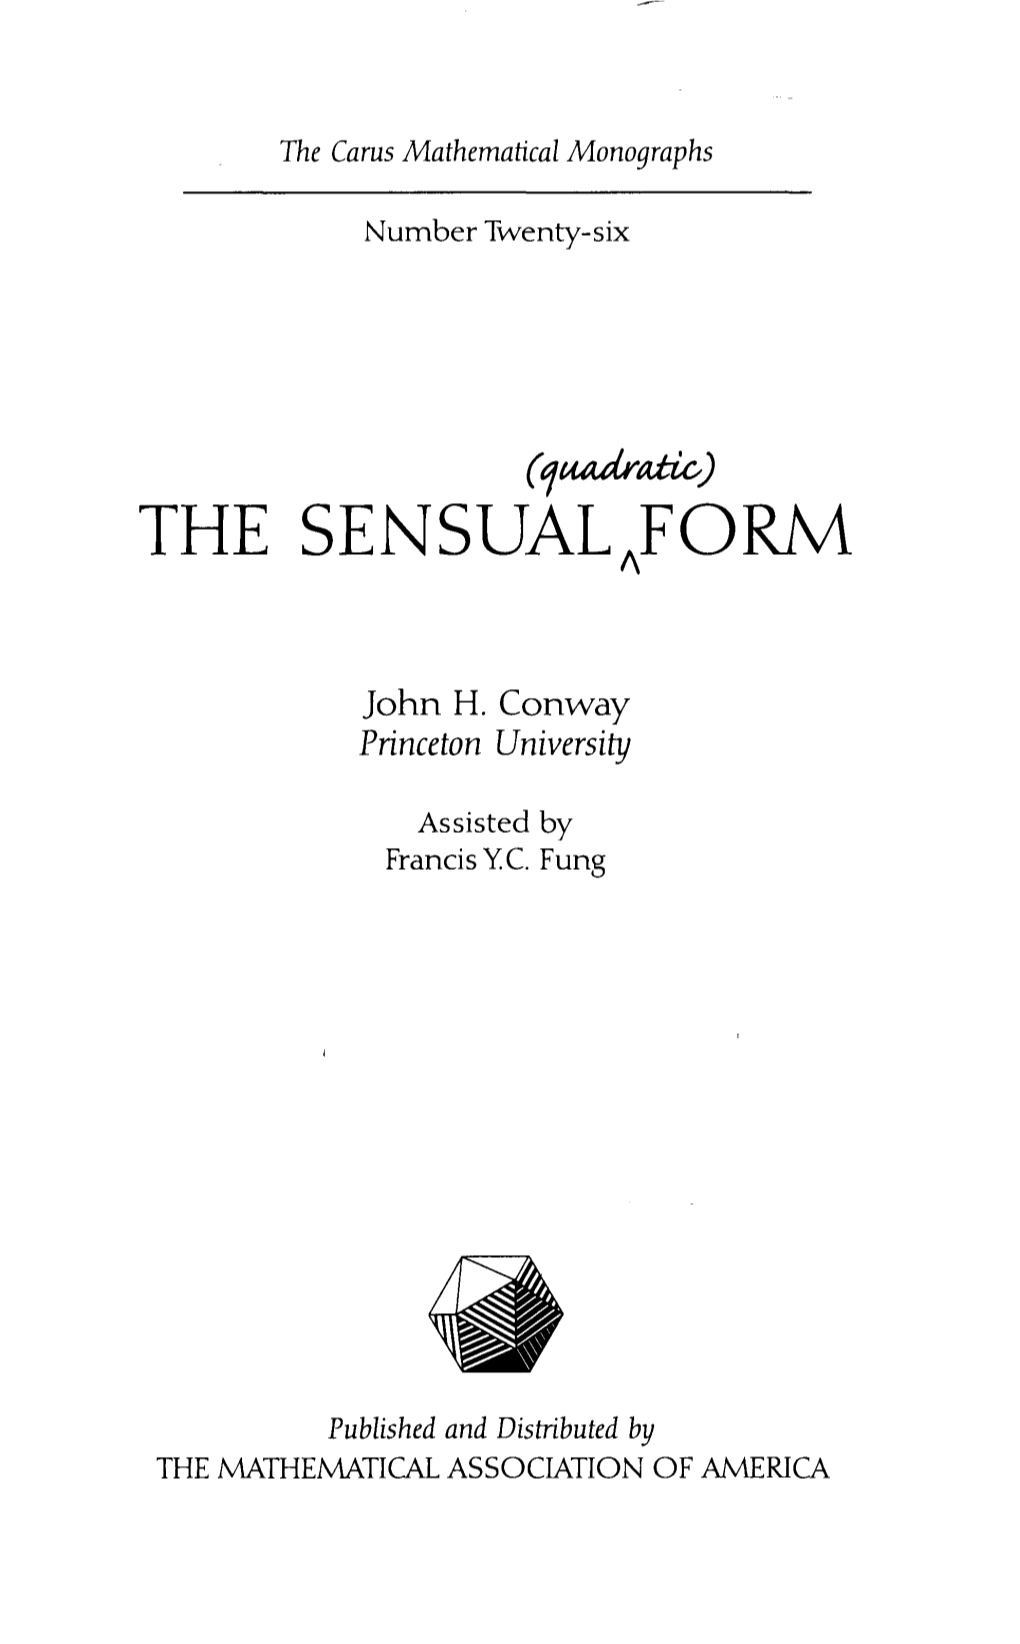 The Sensual (Quadratic) Form, by John H